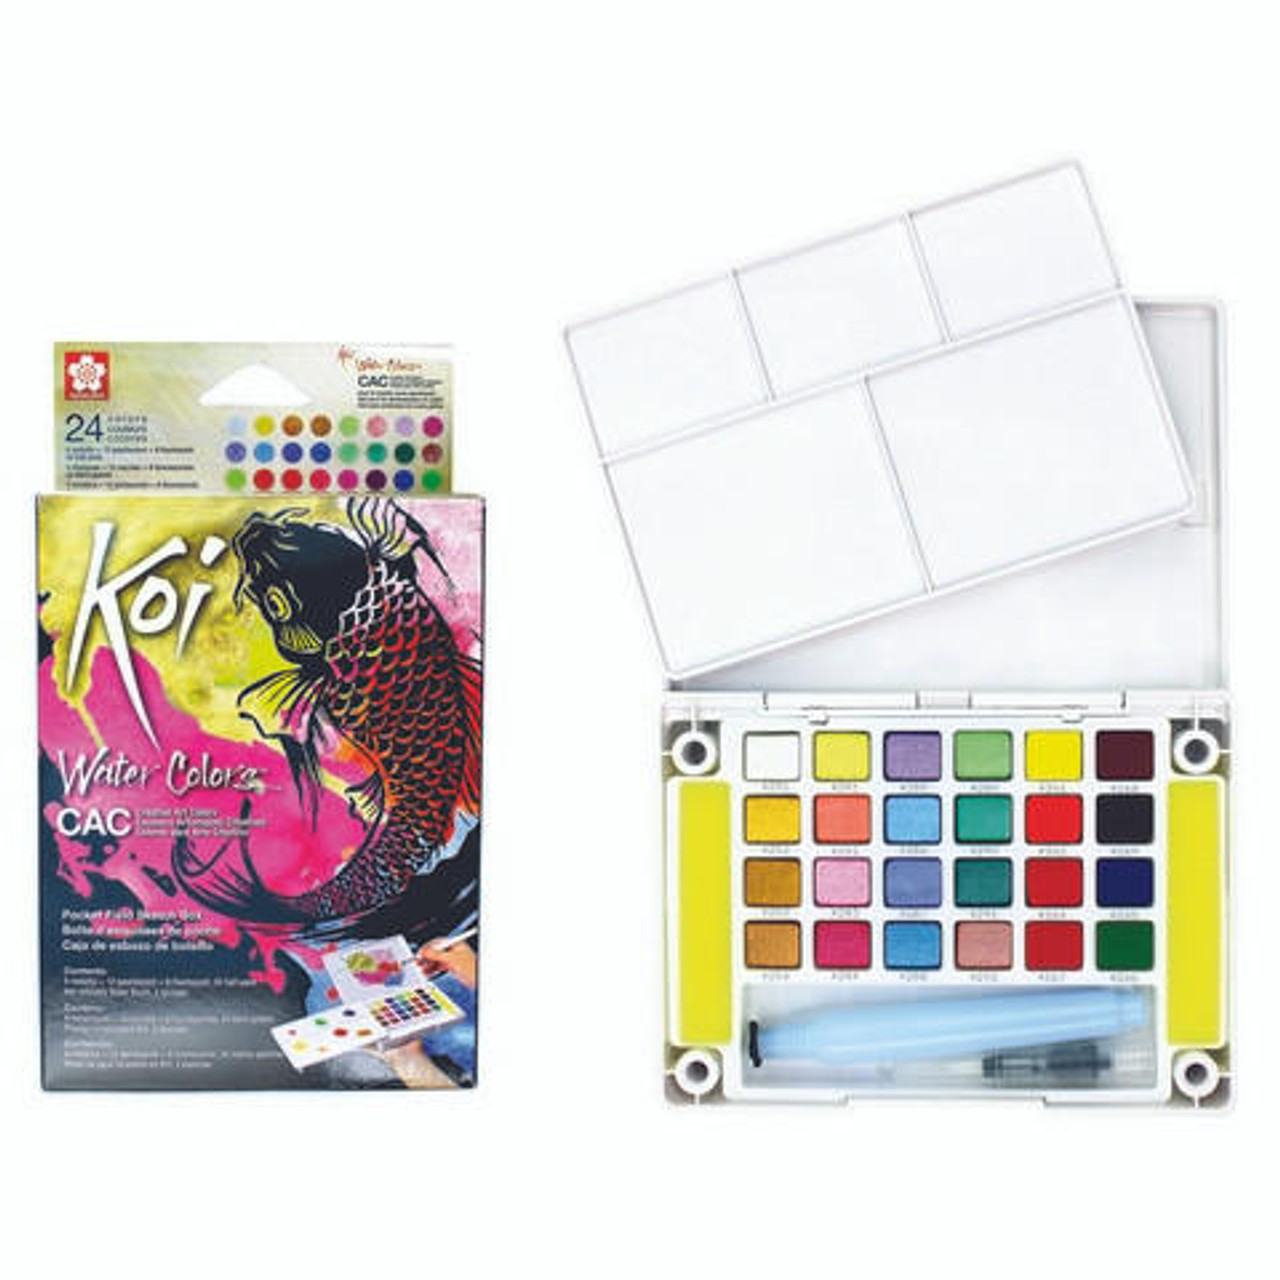 Sakura Koi Watercolor Pocket Field Sketch Box Set, 48-Colors